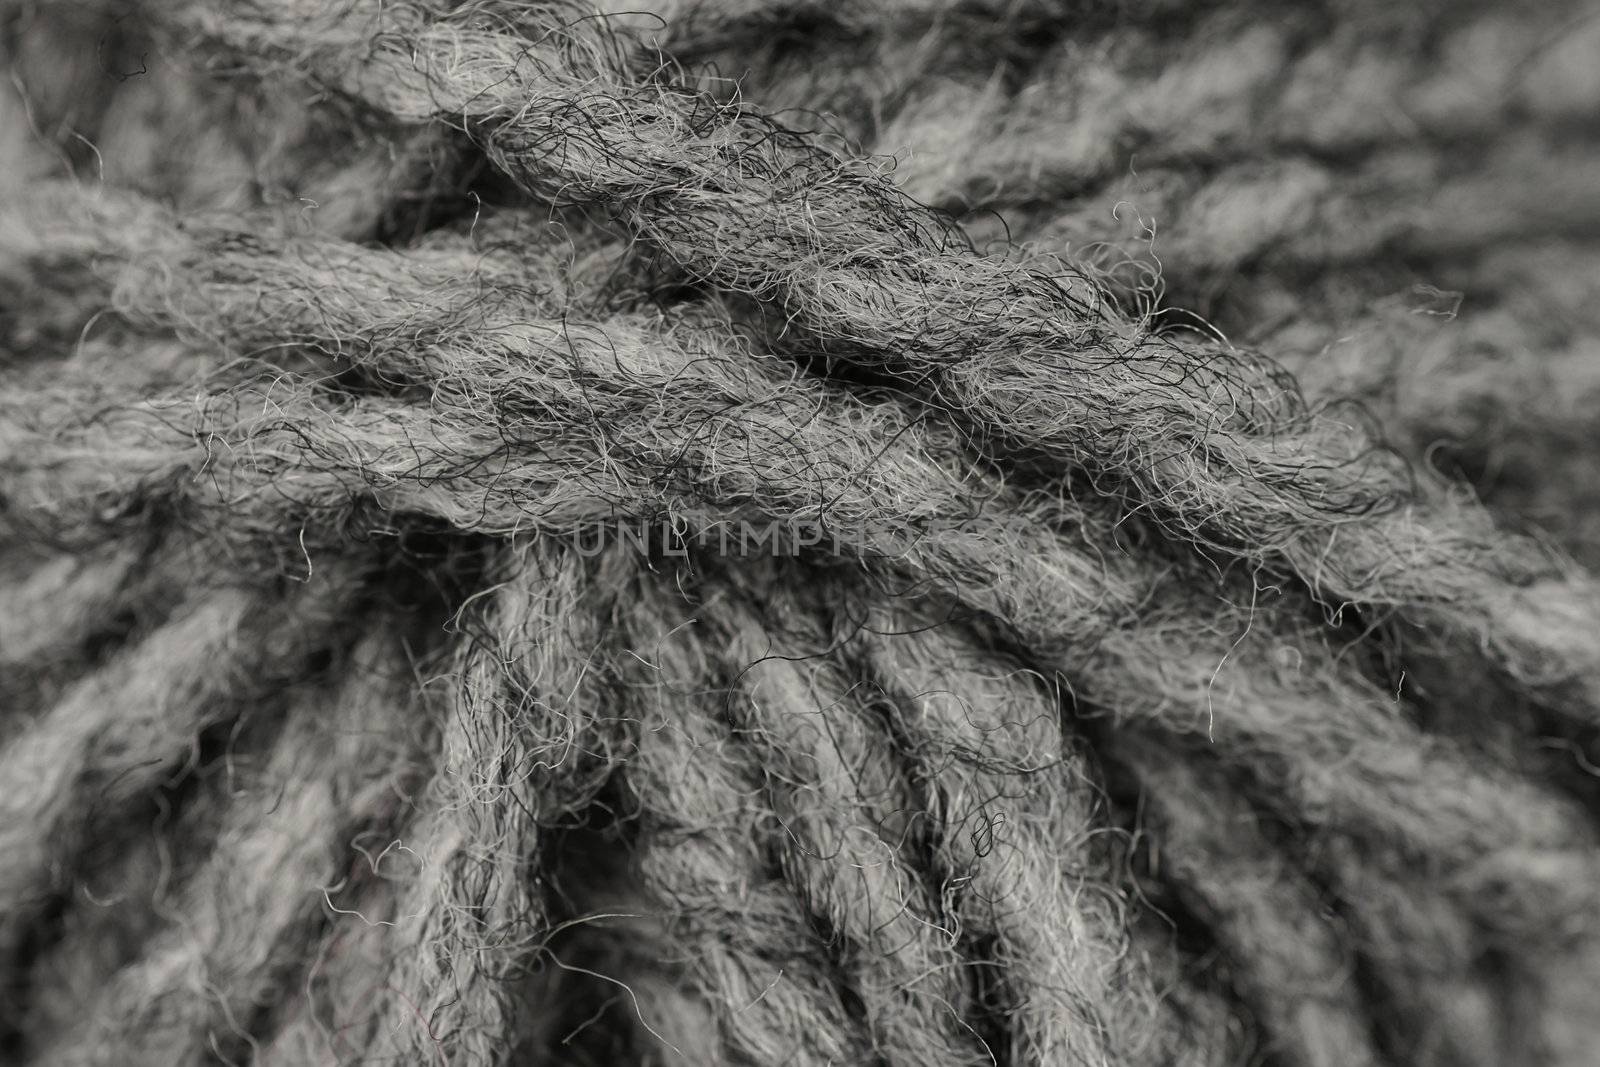 Macro shot of ball of grey wool or yarn by Mirage3